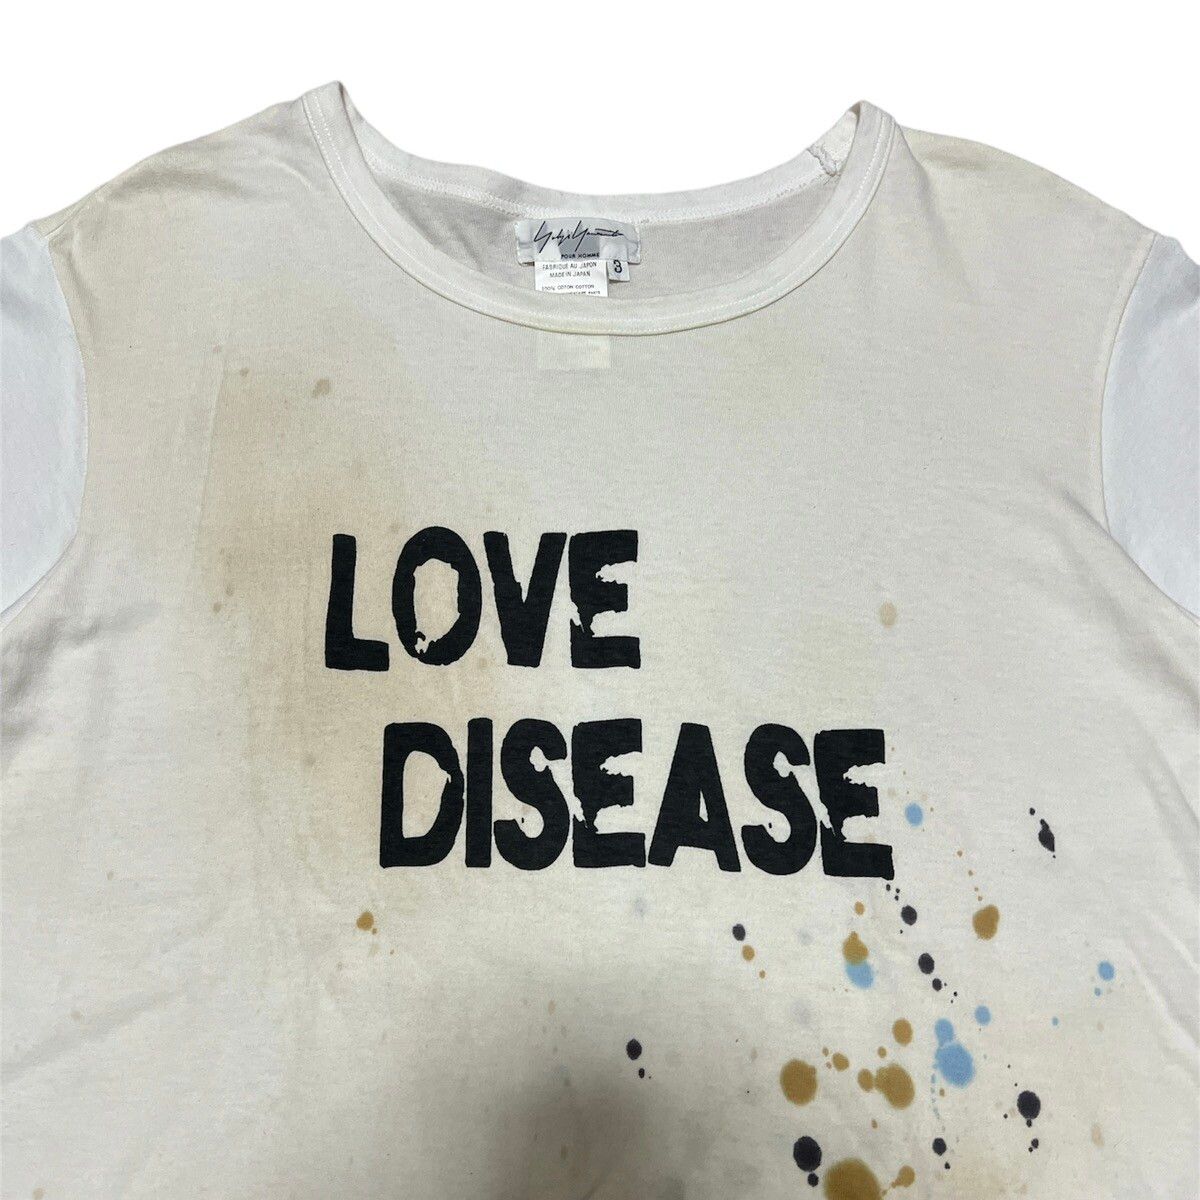 SS08 Yohji Yamamoto Pour Homme Love Disease T shirt - 3